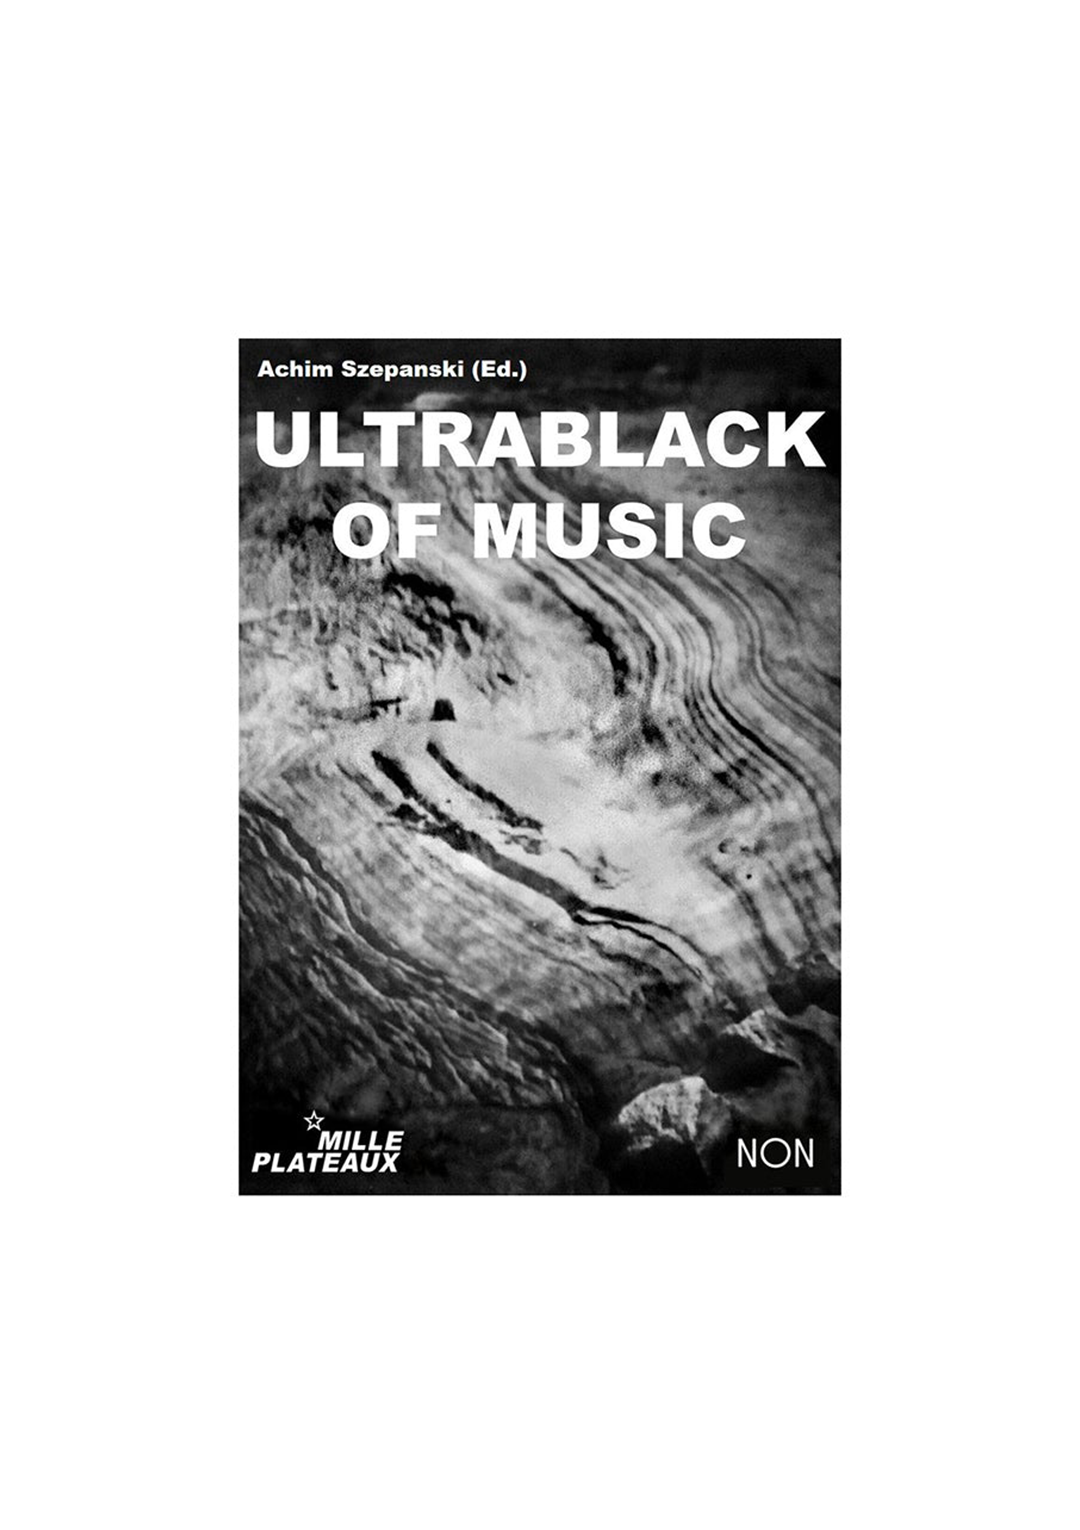 Ultrablack of Music